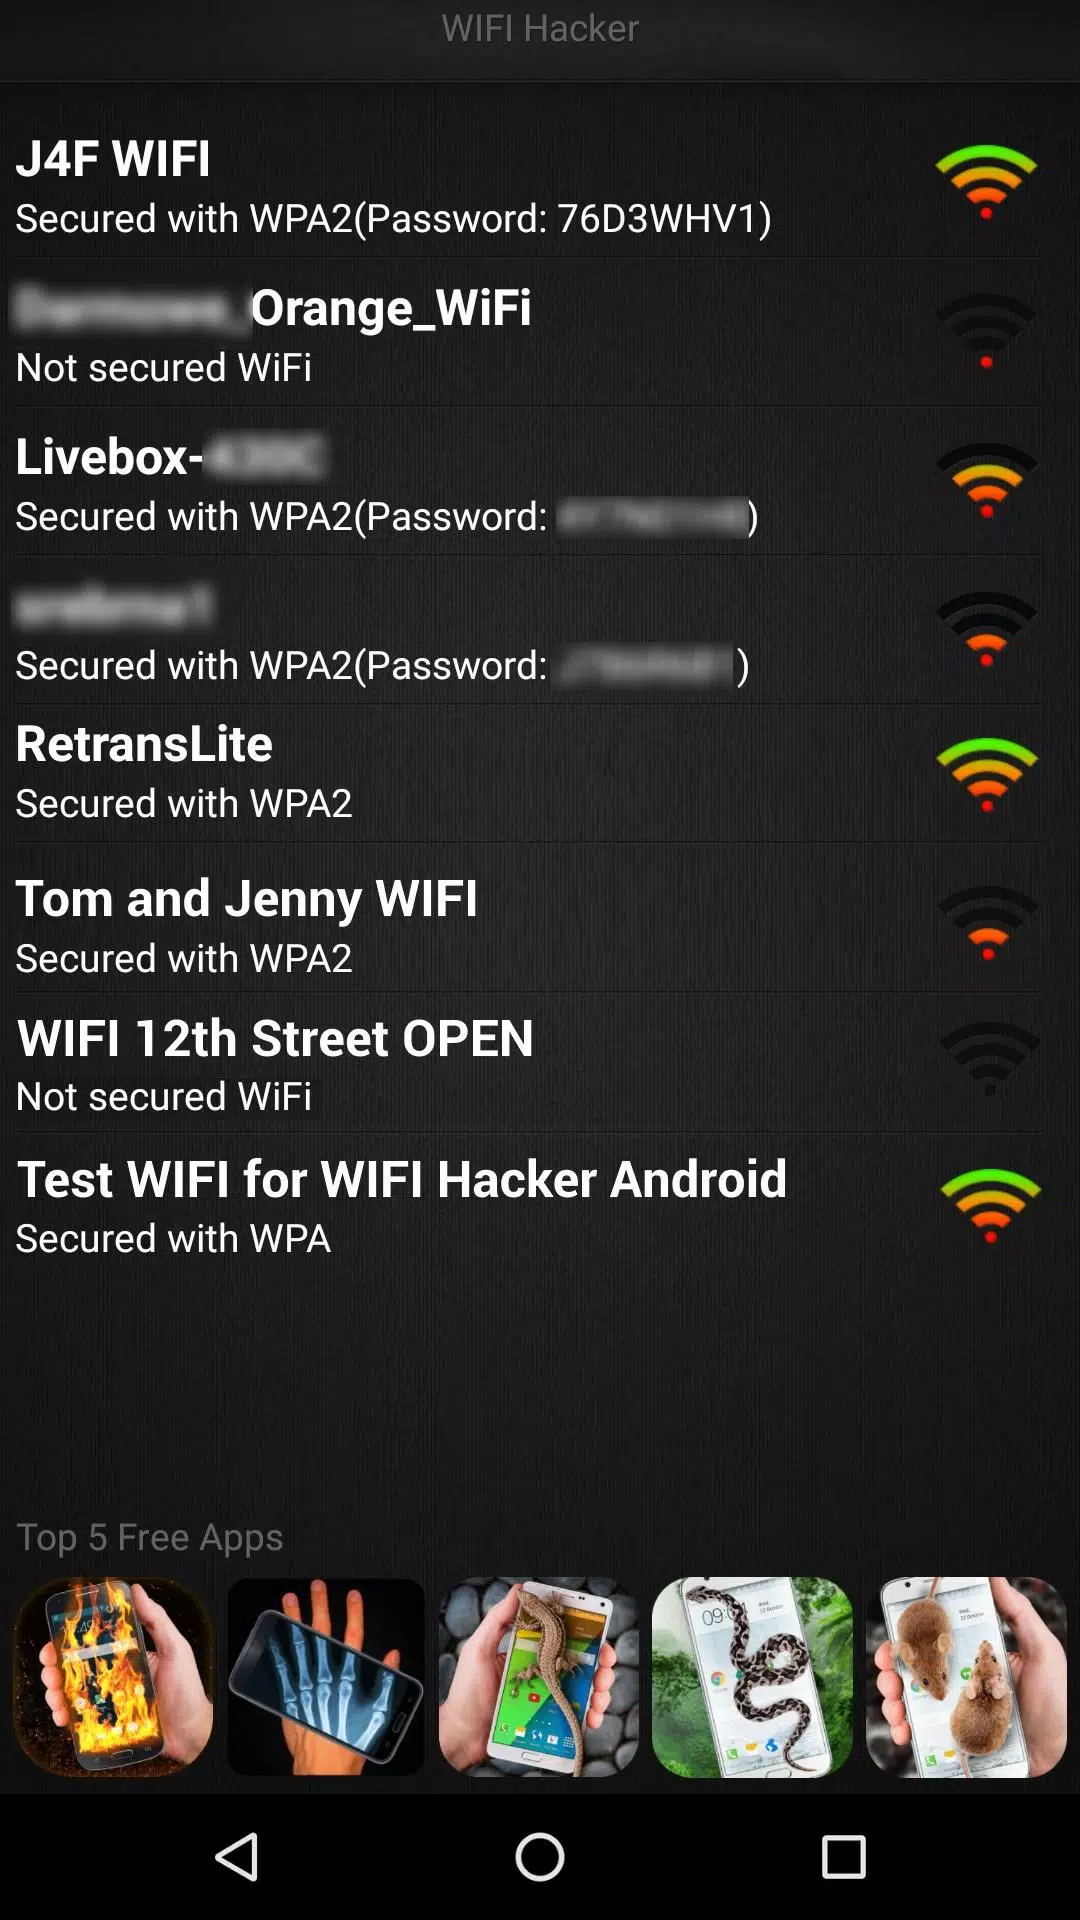 WiFi HaCker Simulator 2020 - Get WiFi Password - Baixar APK para Android